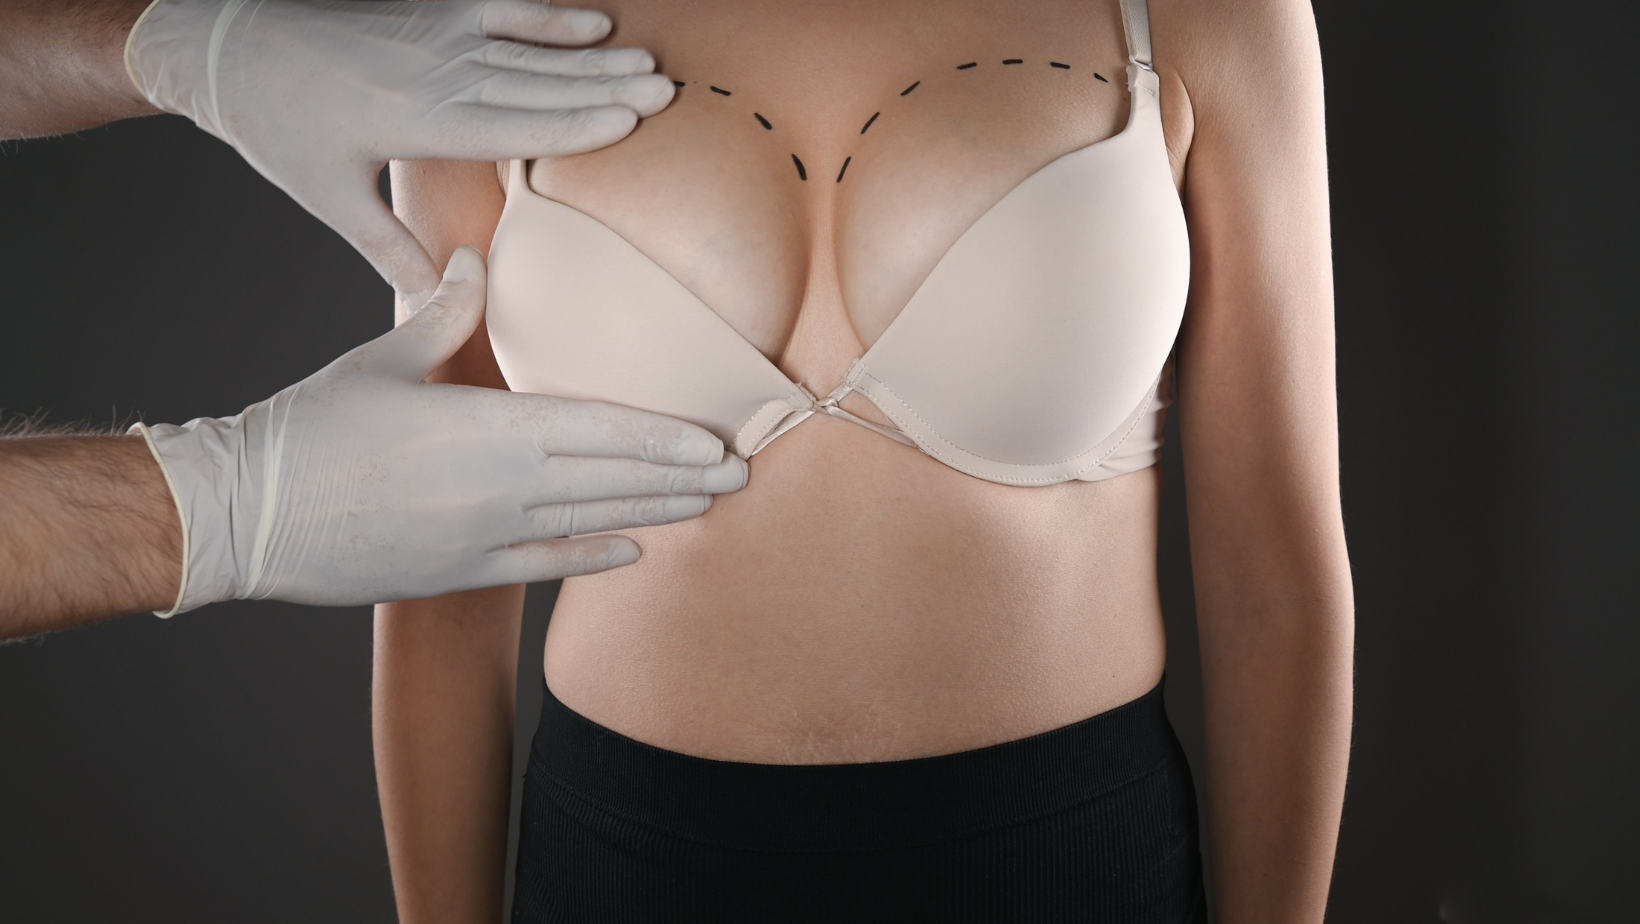 After Breast Augmentation: Should I Wear a Bra During Sleep - Dallas, TX